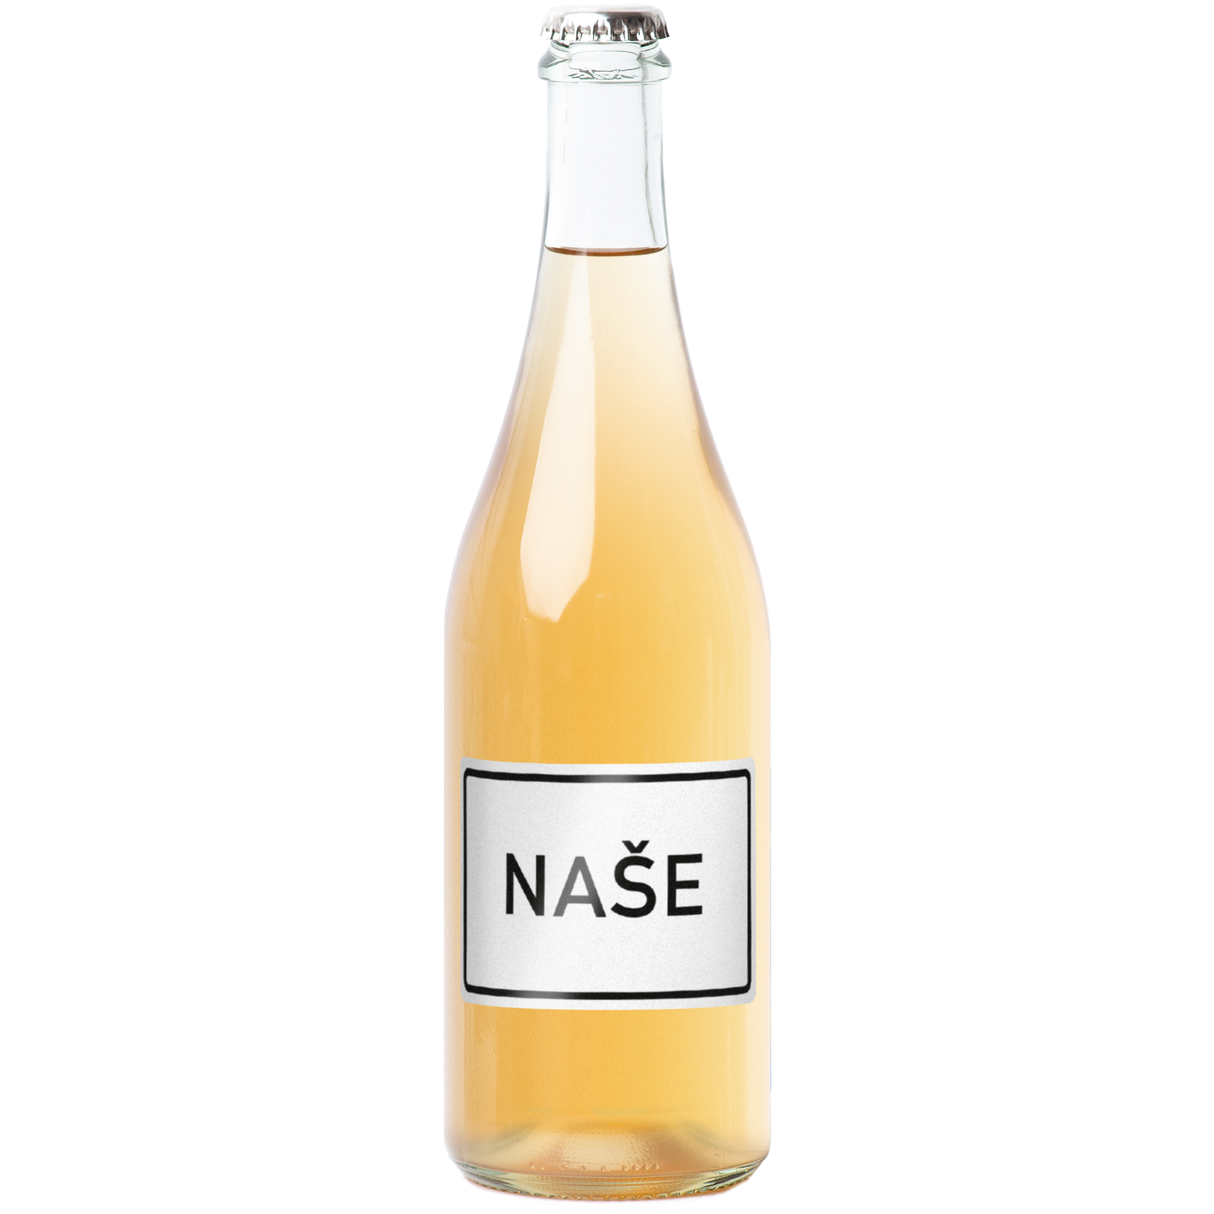 Milan Nestarec Nase Sparkling Morava - Grain & Vine | Natural Wines, Rare Bourbon and Tequila Collection